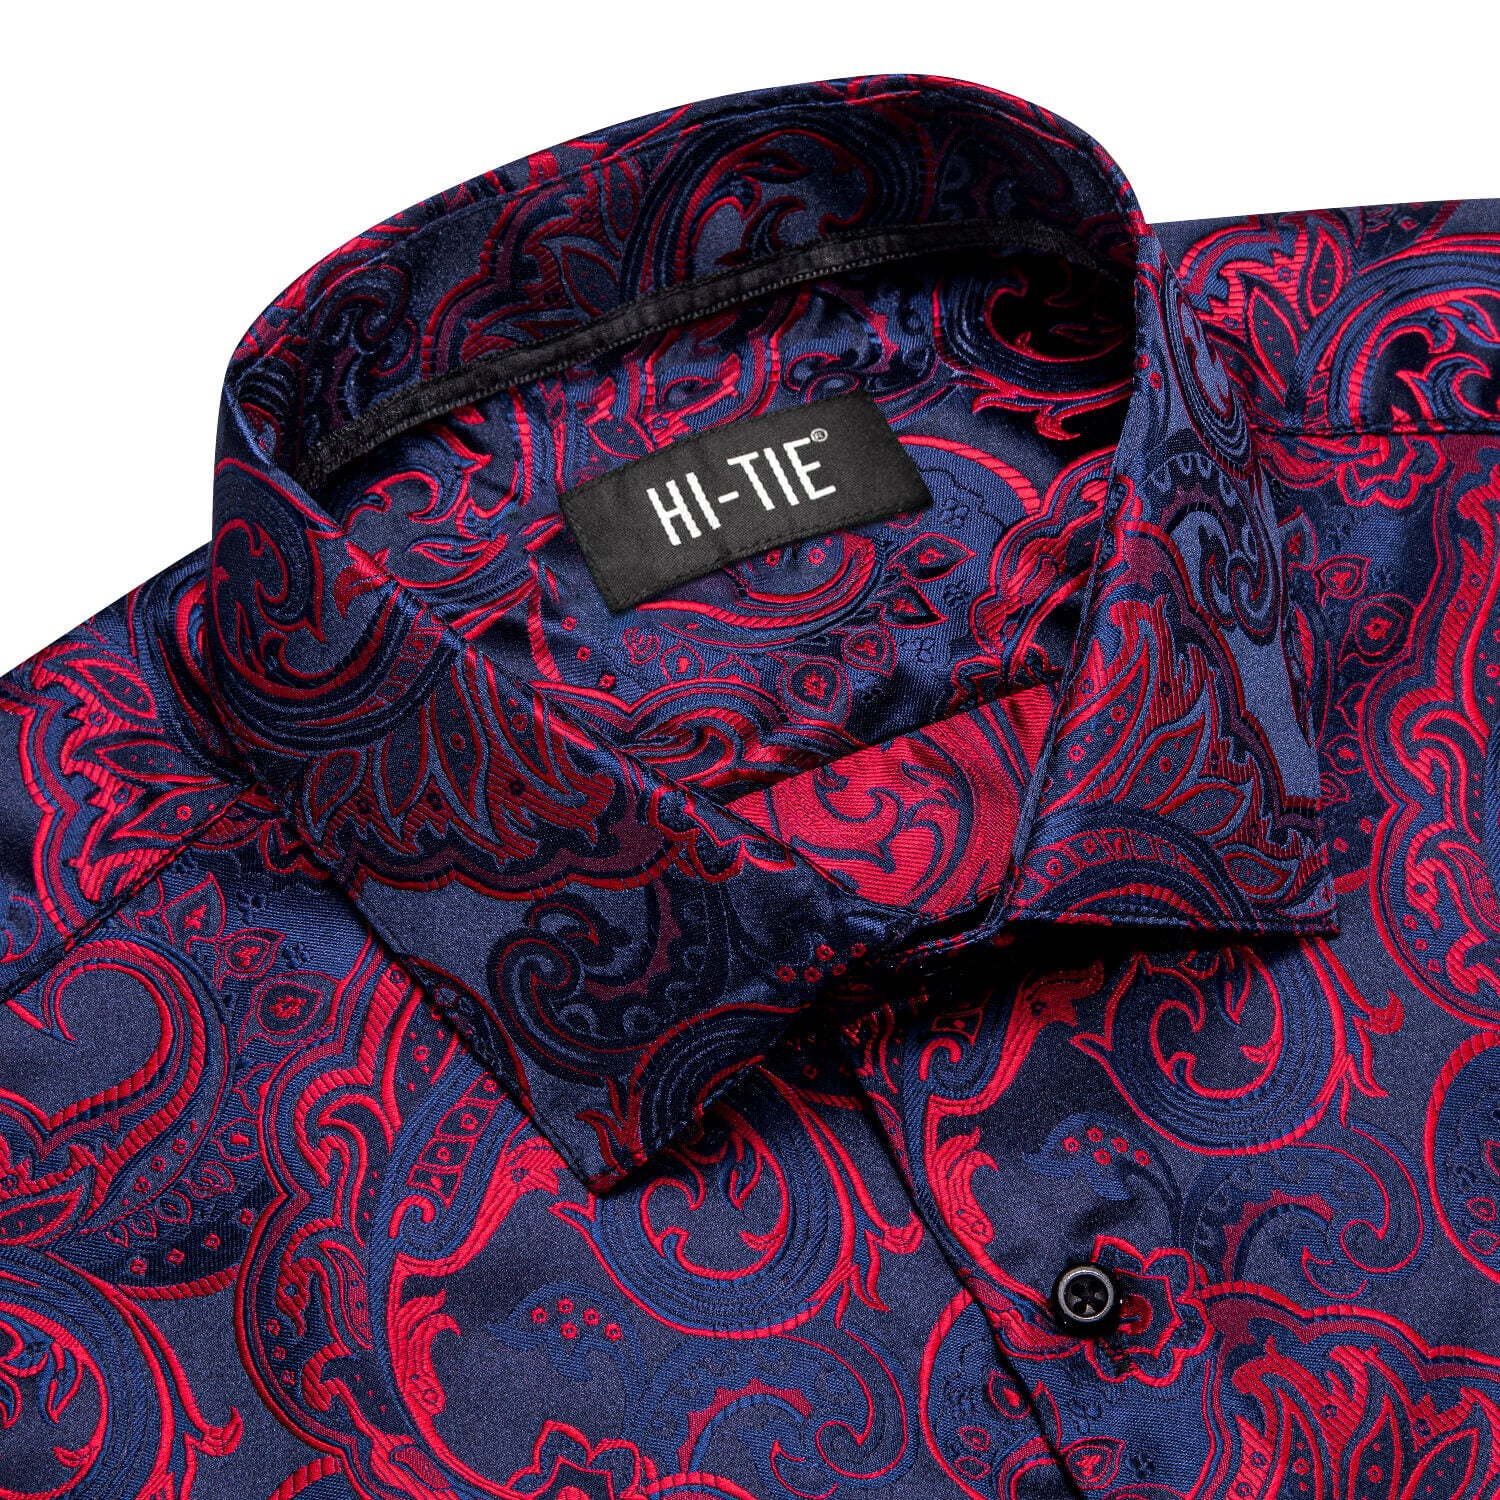 Hi-Tie Men's Shirt Jacquard Woven Navy Blue Red Paisley Silk Shirt